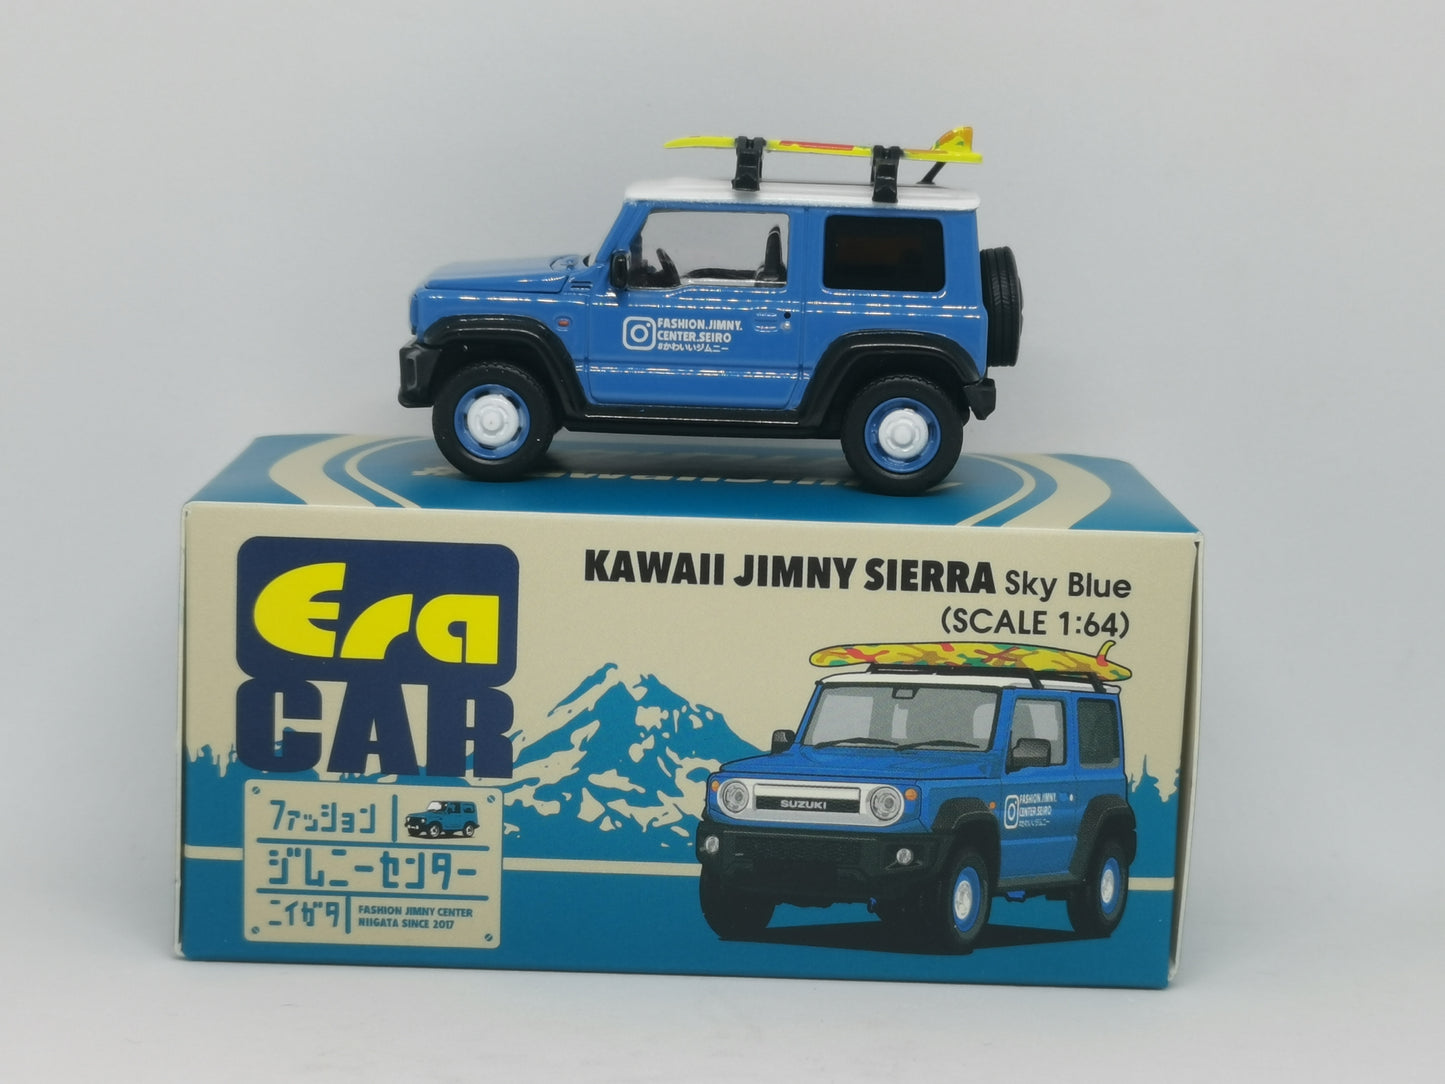 Era Car #SP Kawaii Suzuki Jimny Sierra (Sky Blue)